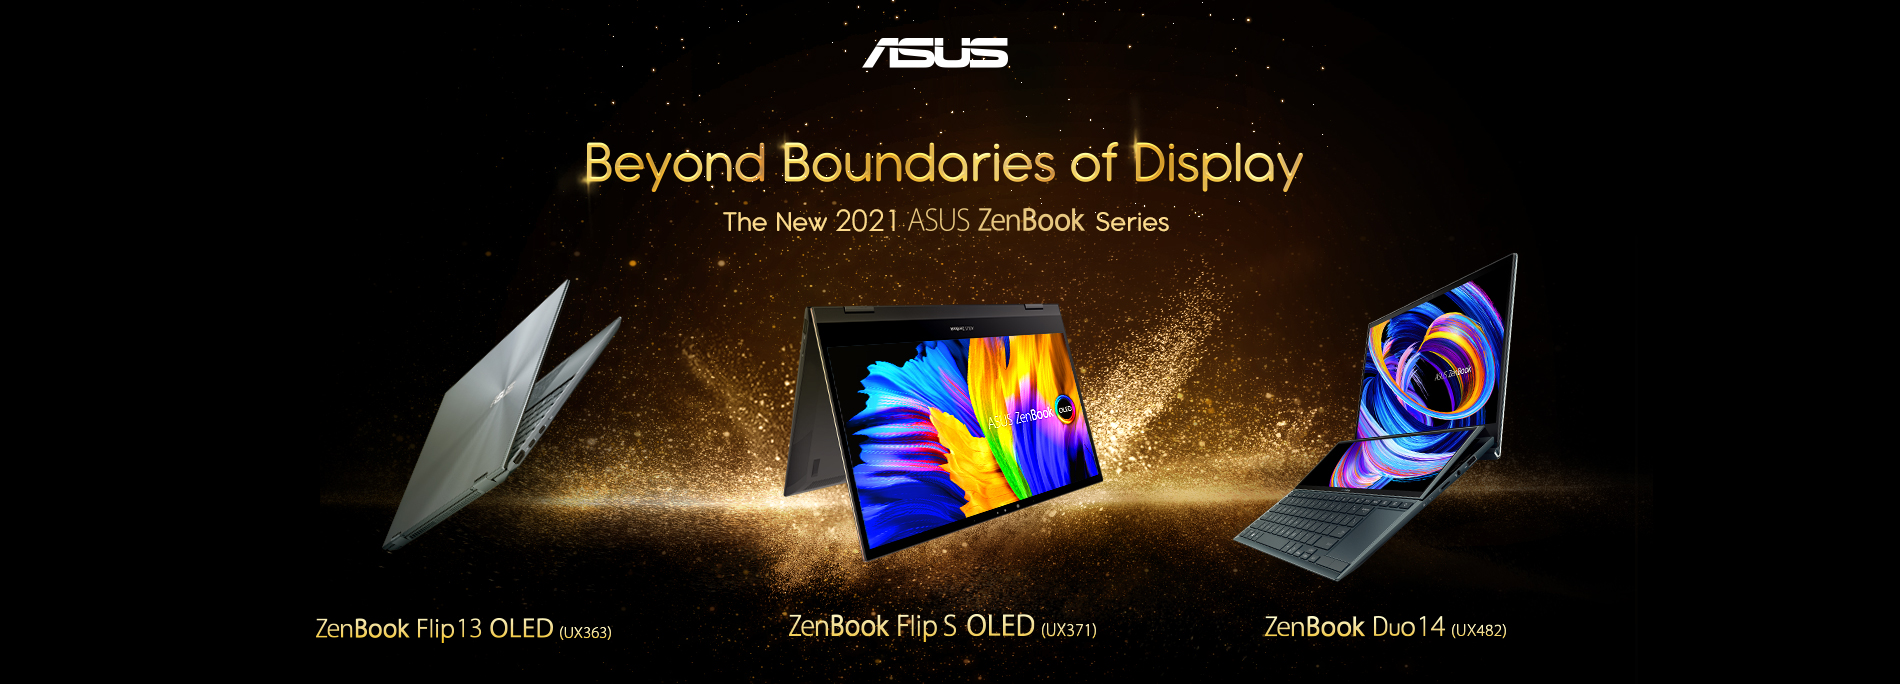 2021 ASUS ZenBook Unveiled